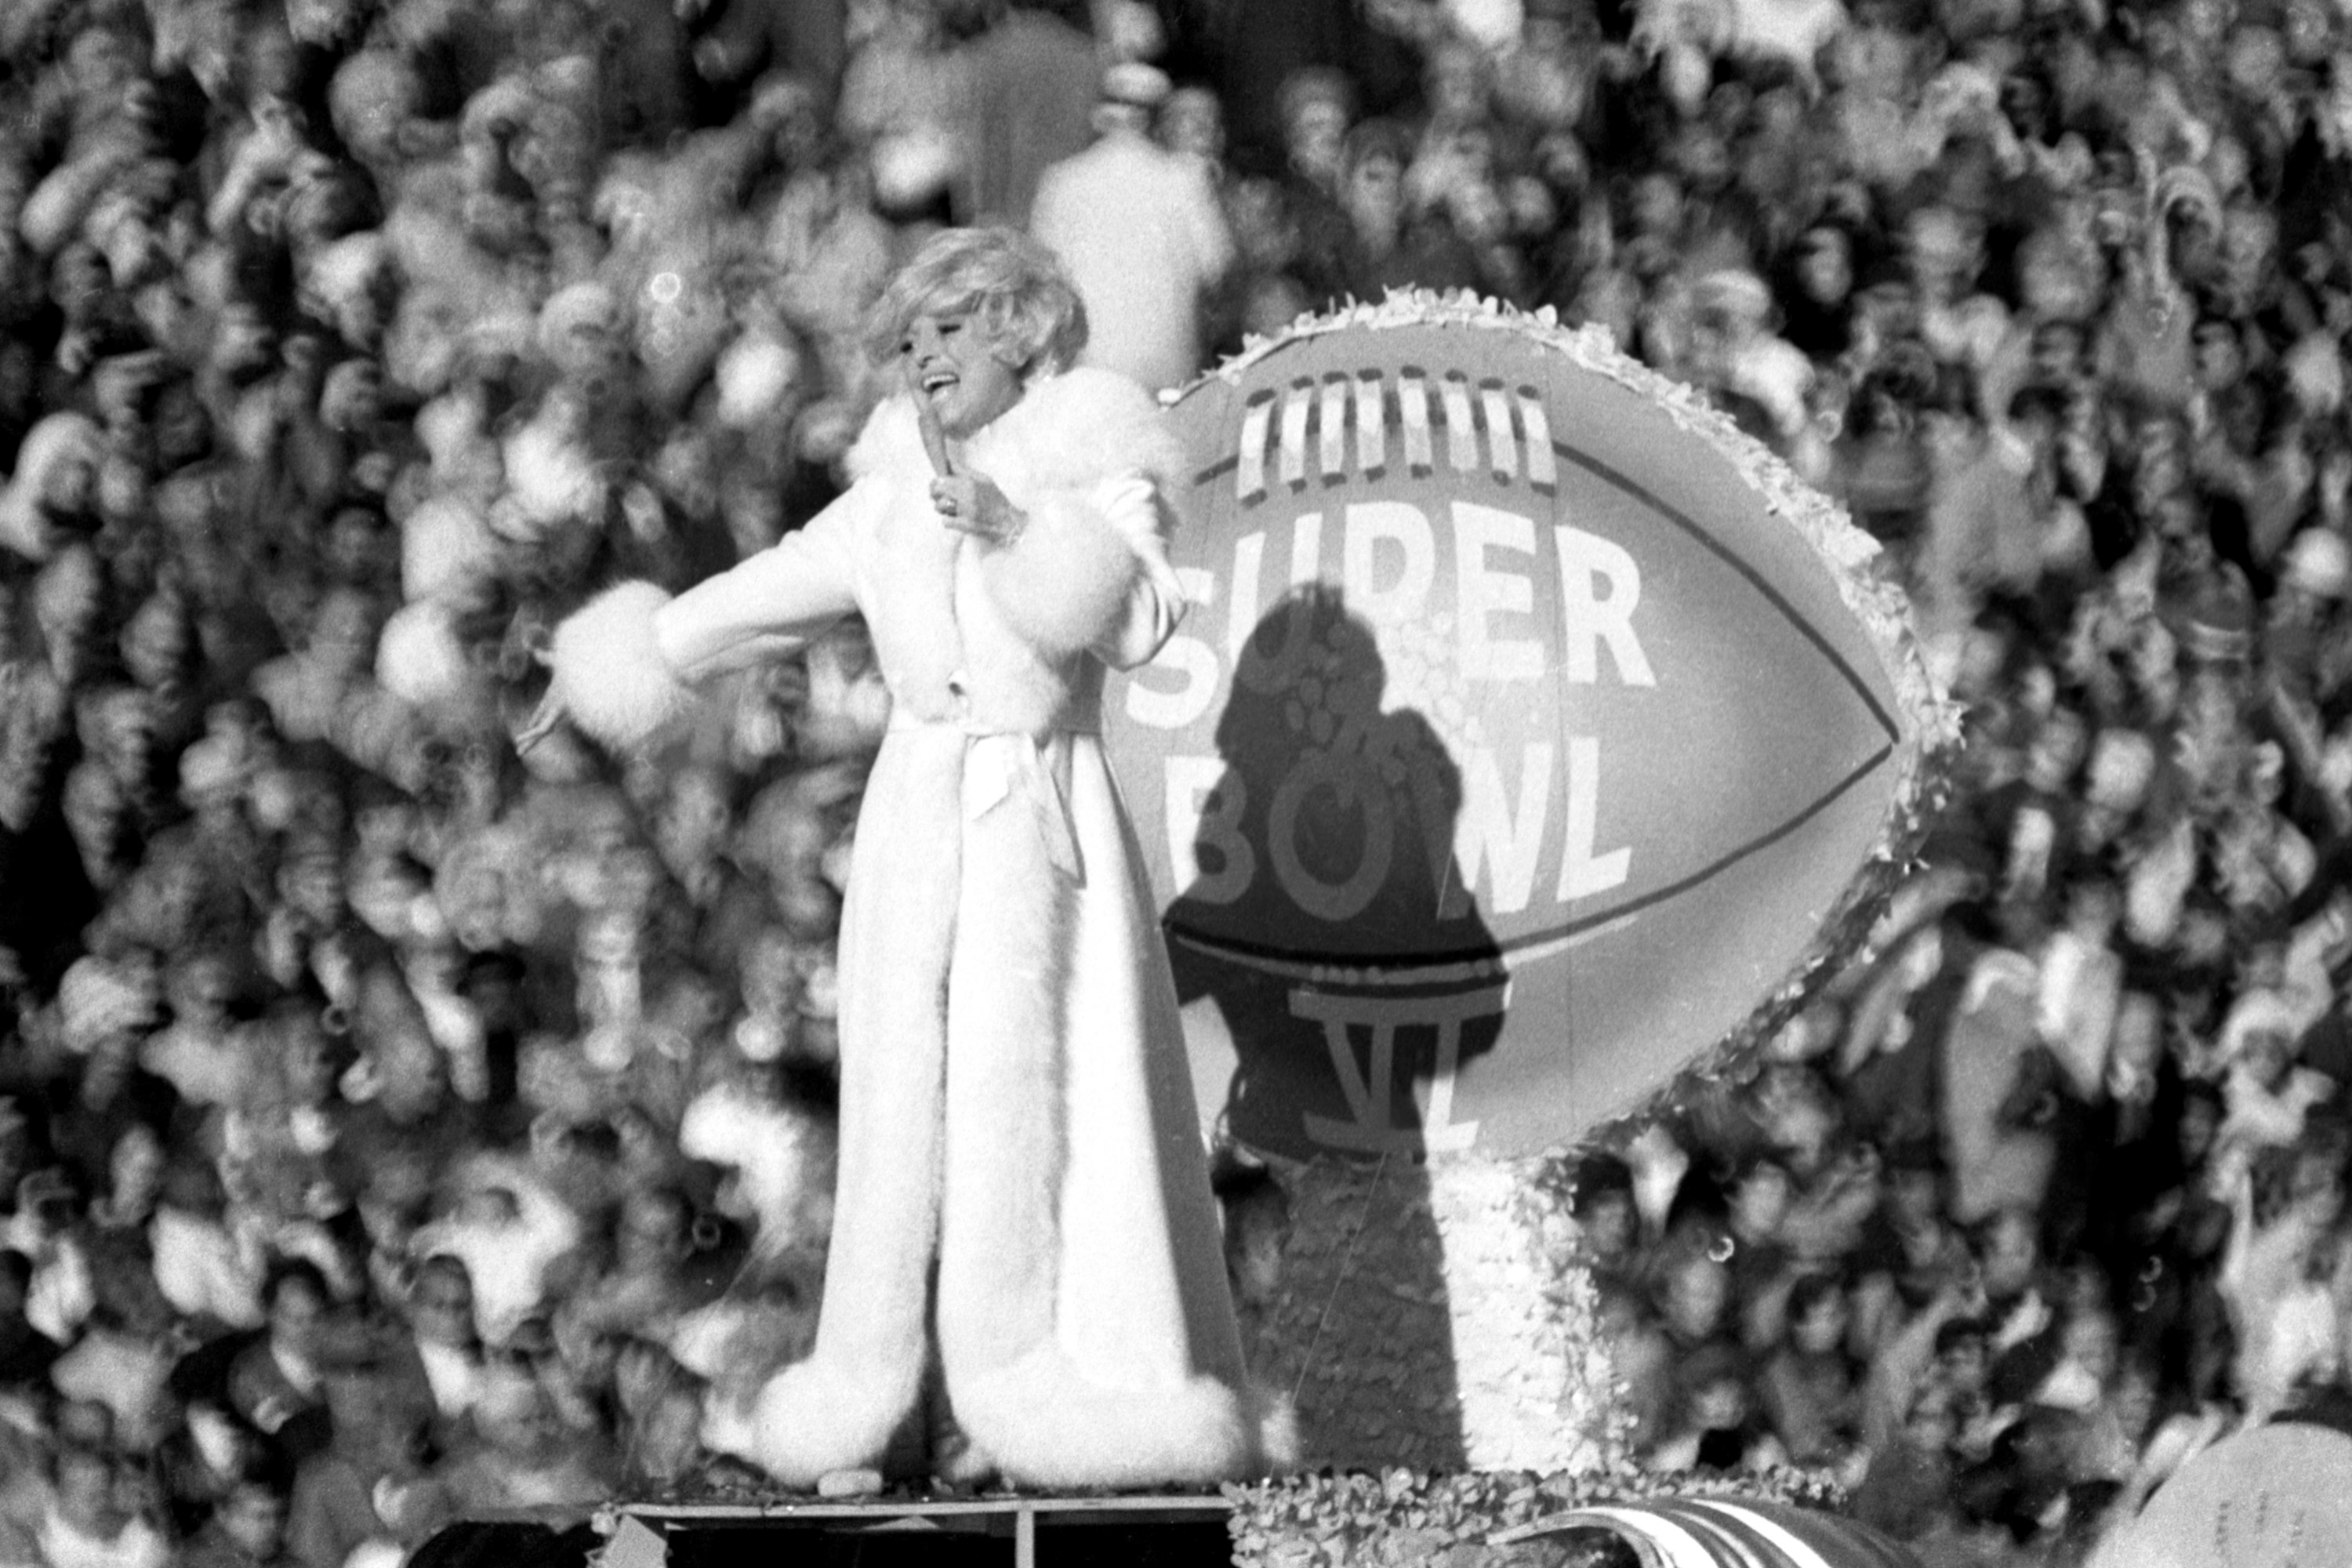 Singer Carol Channing performs at halftime of Super Bowl VI on January 16, 1972